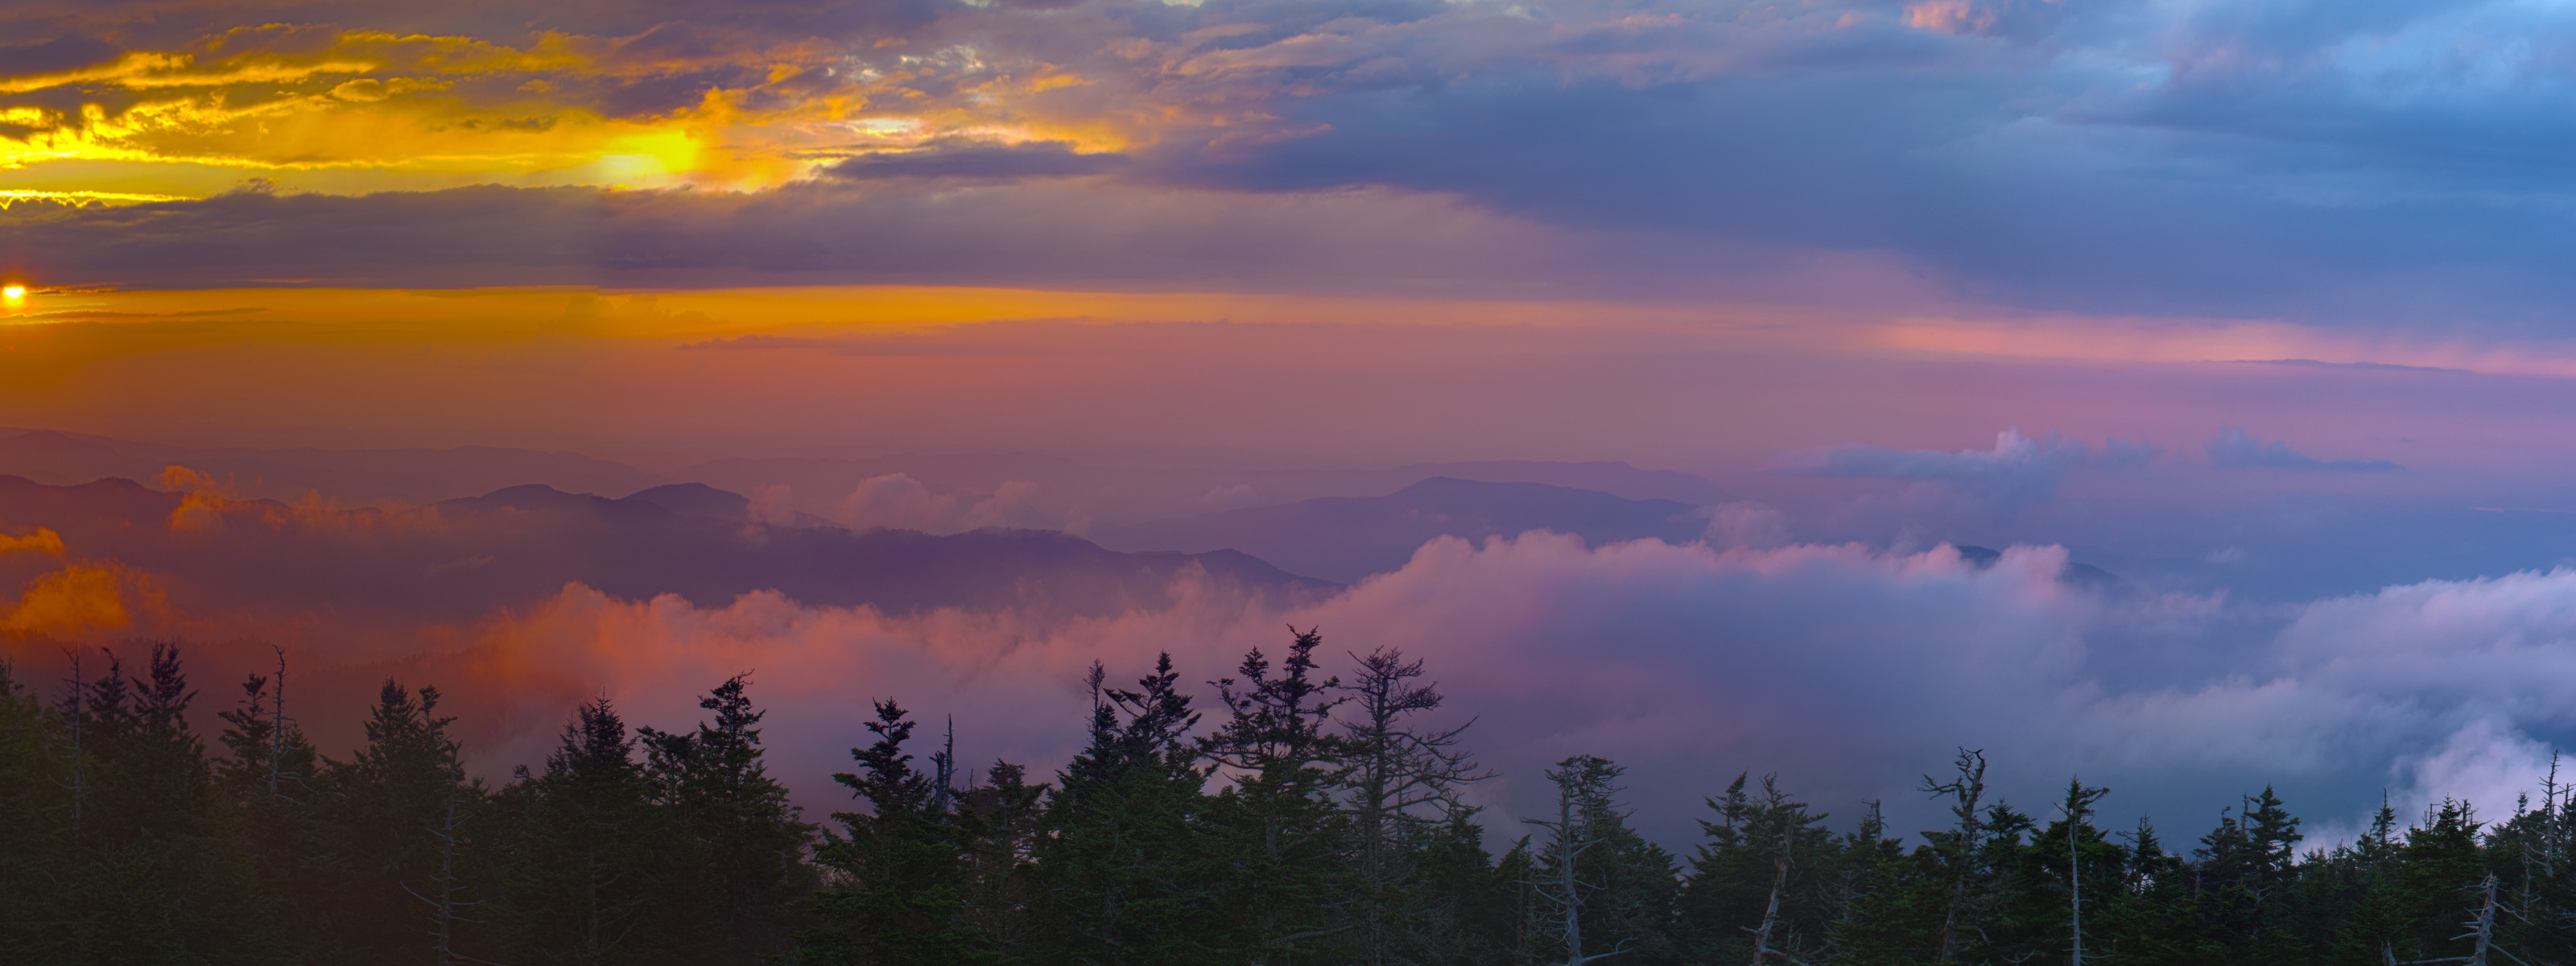 Panoramic wallpaper, Mountain sunset, North America, USA landscape, 3200x1200 Dual Screen Desktop